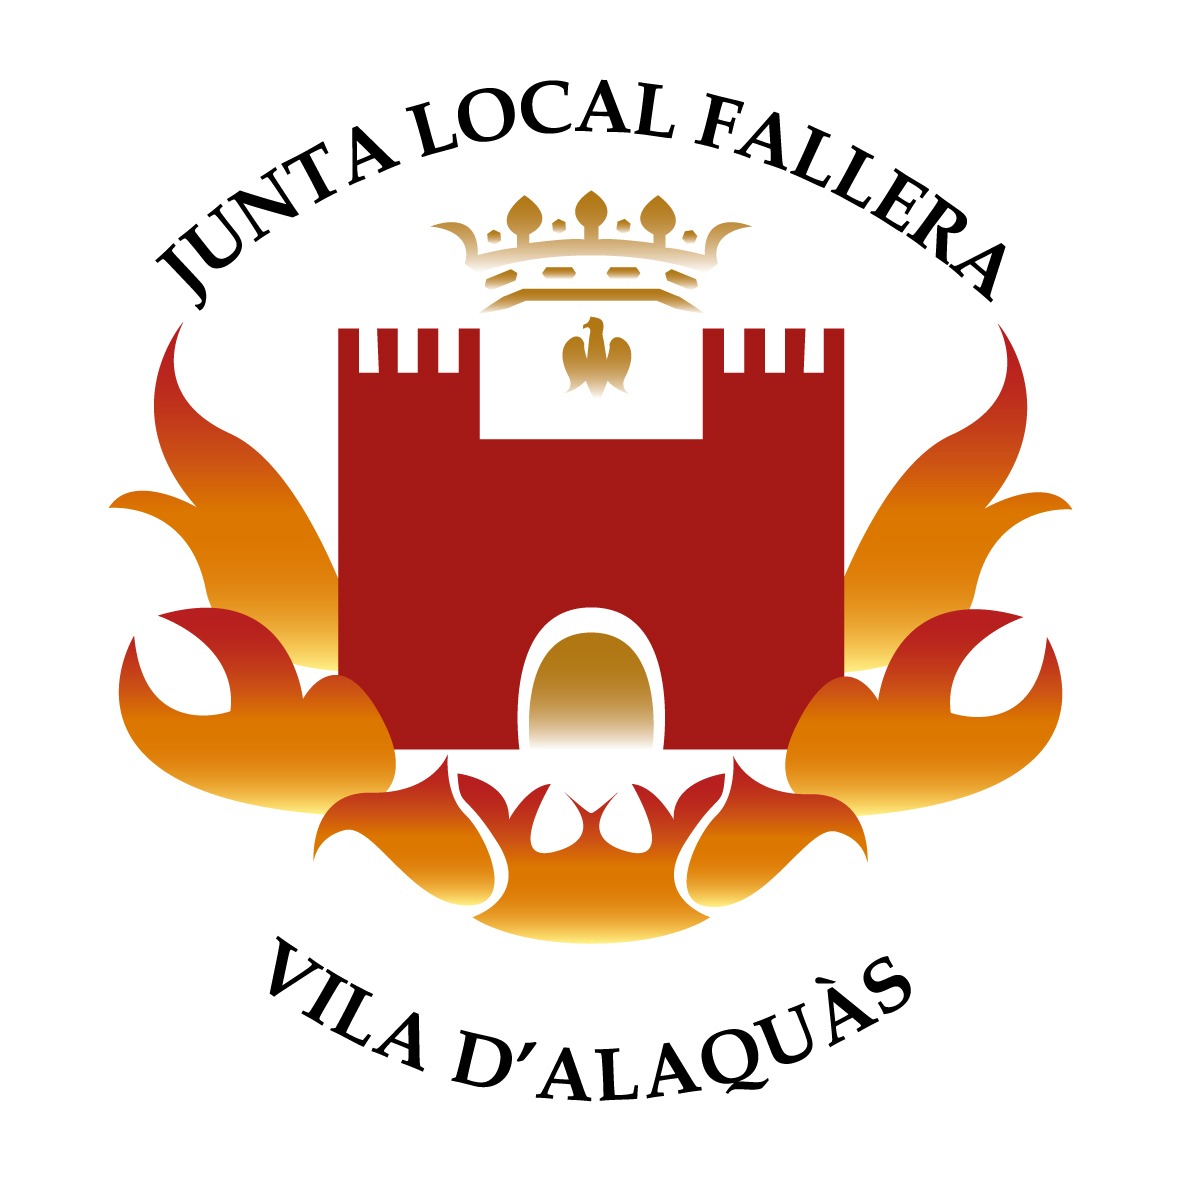 Junta Local Fallera d'Alaquàs